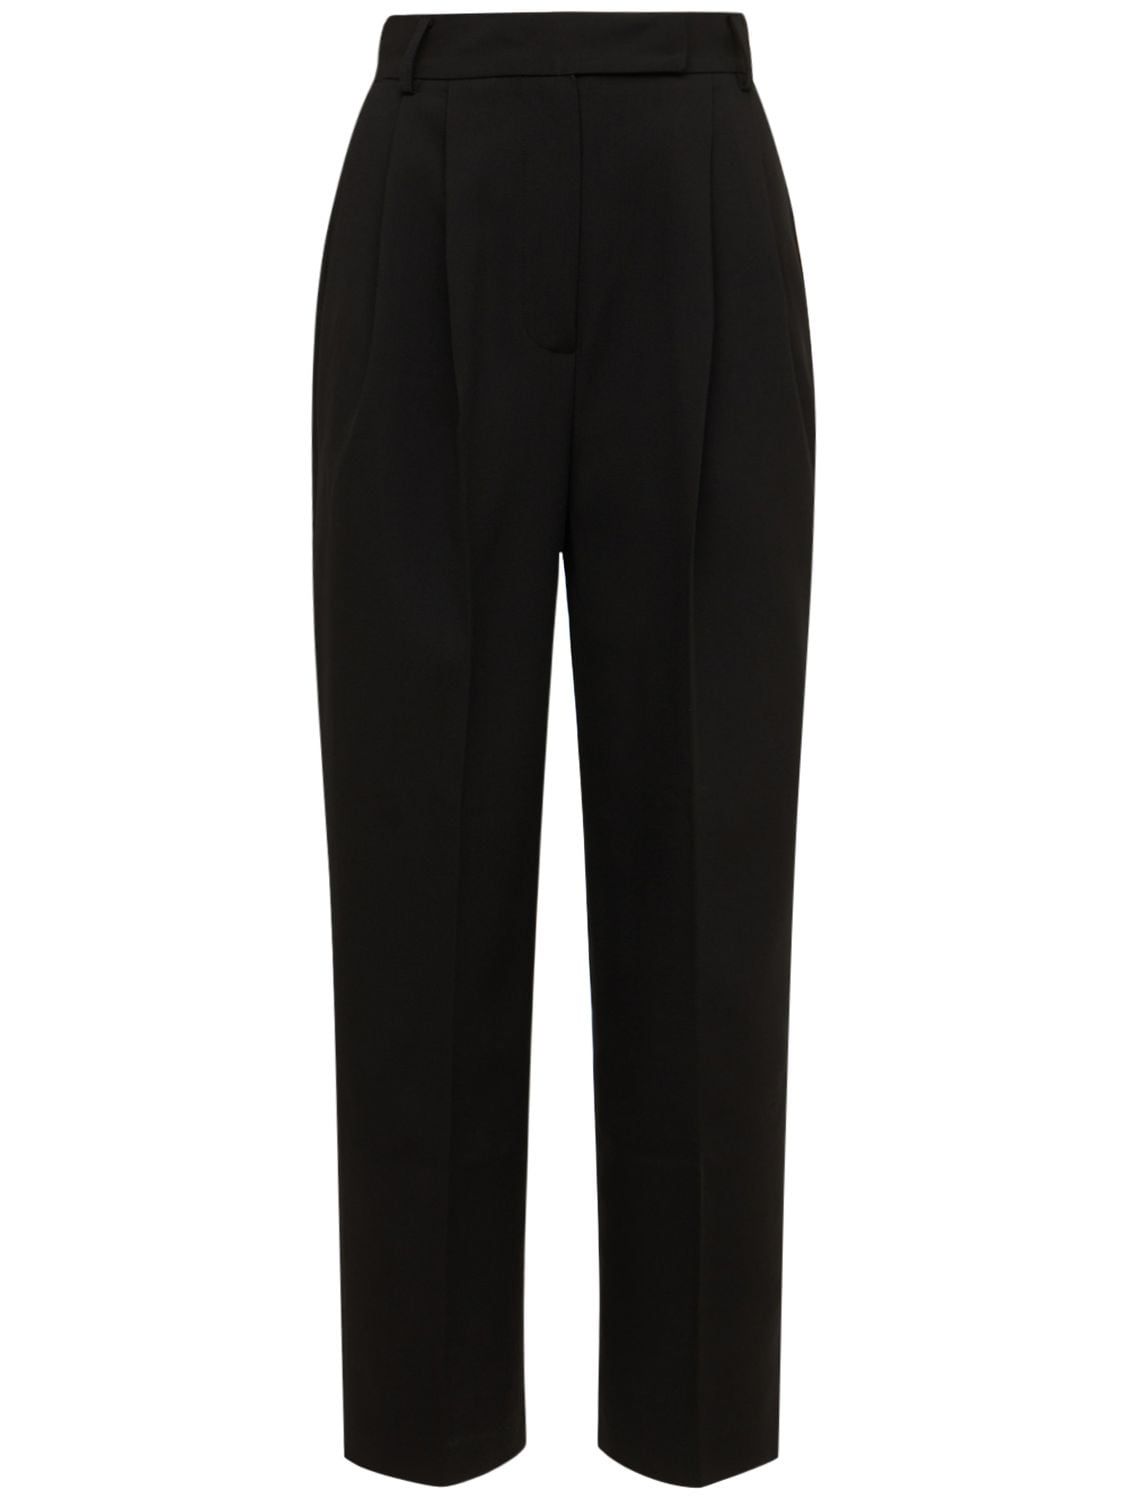 The Frankie Shop - Bea pleated suit pants - Black | Luisaviaroma